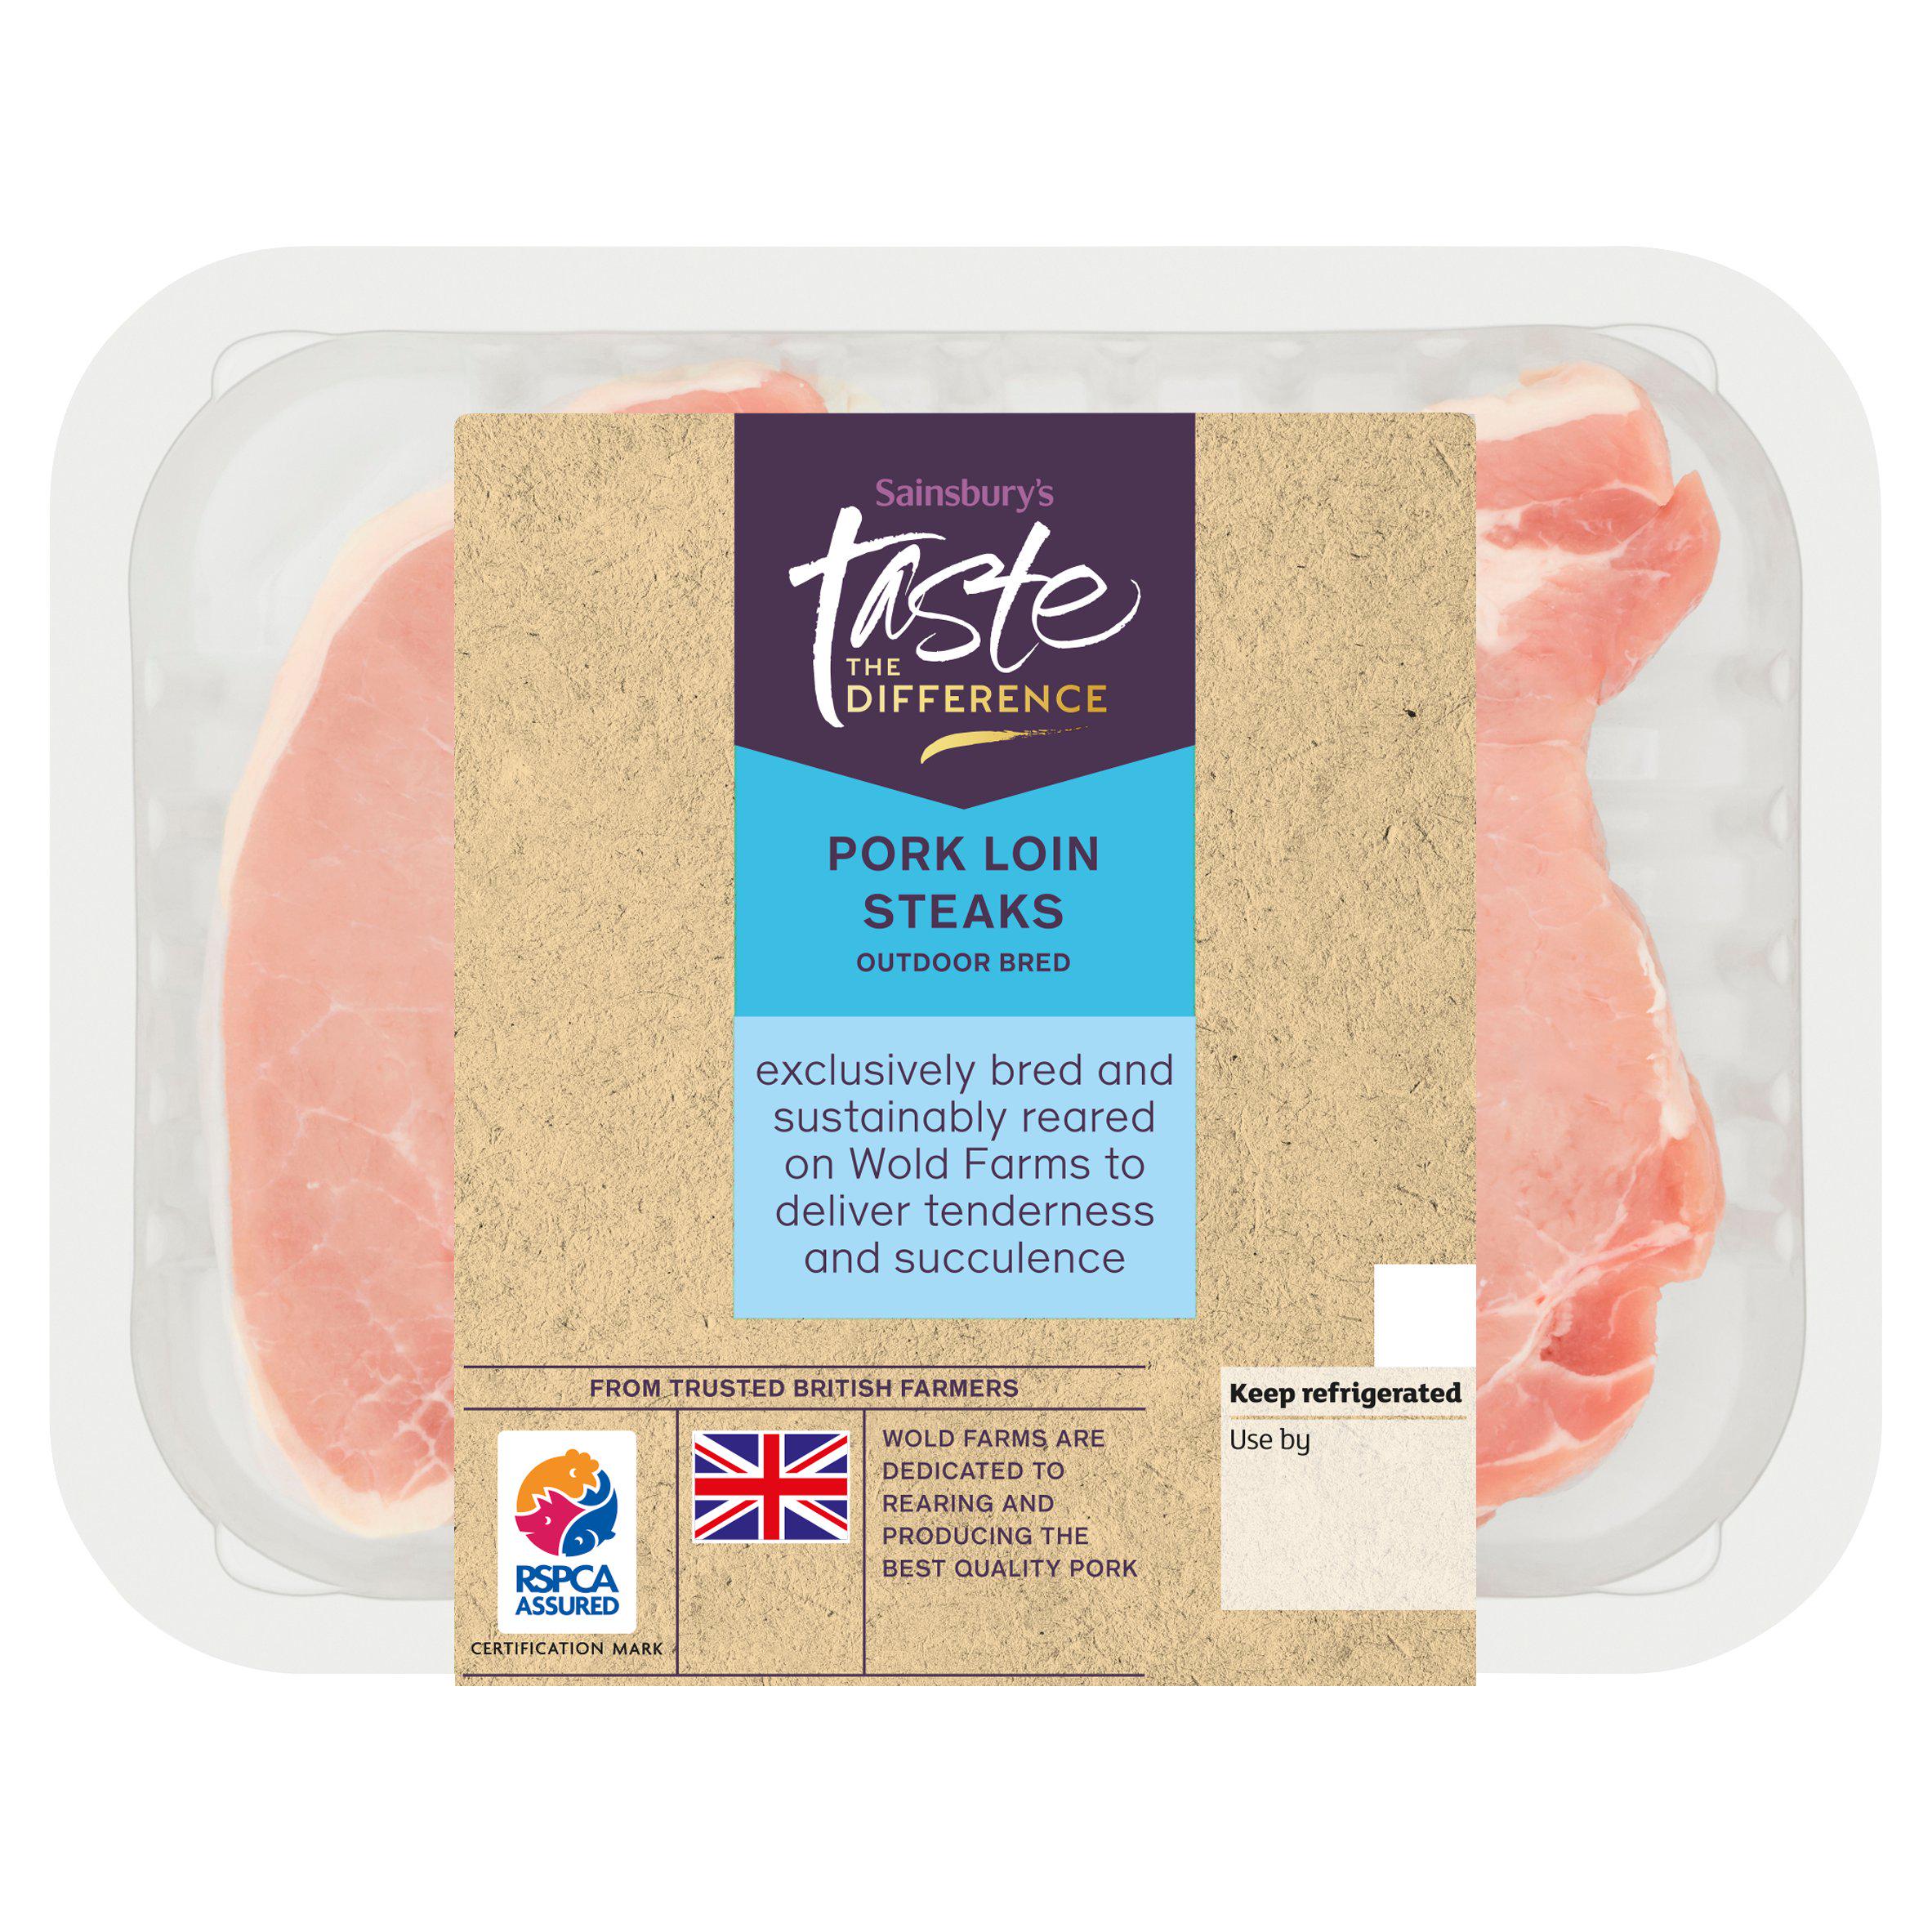 Sainsbury's British Fresh Outdoor Bred Pork Loin Steaks, Taste the Difference x2 400g